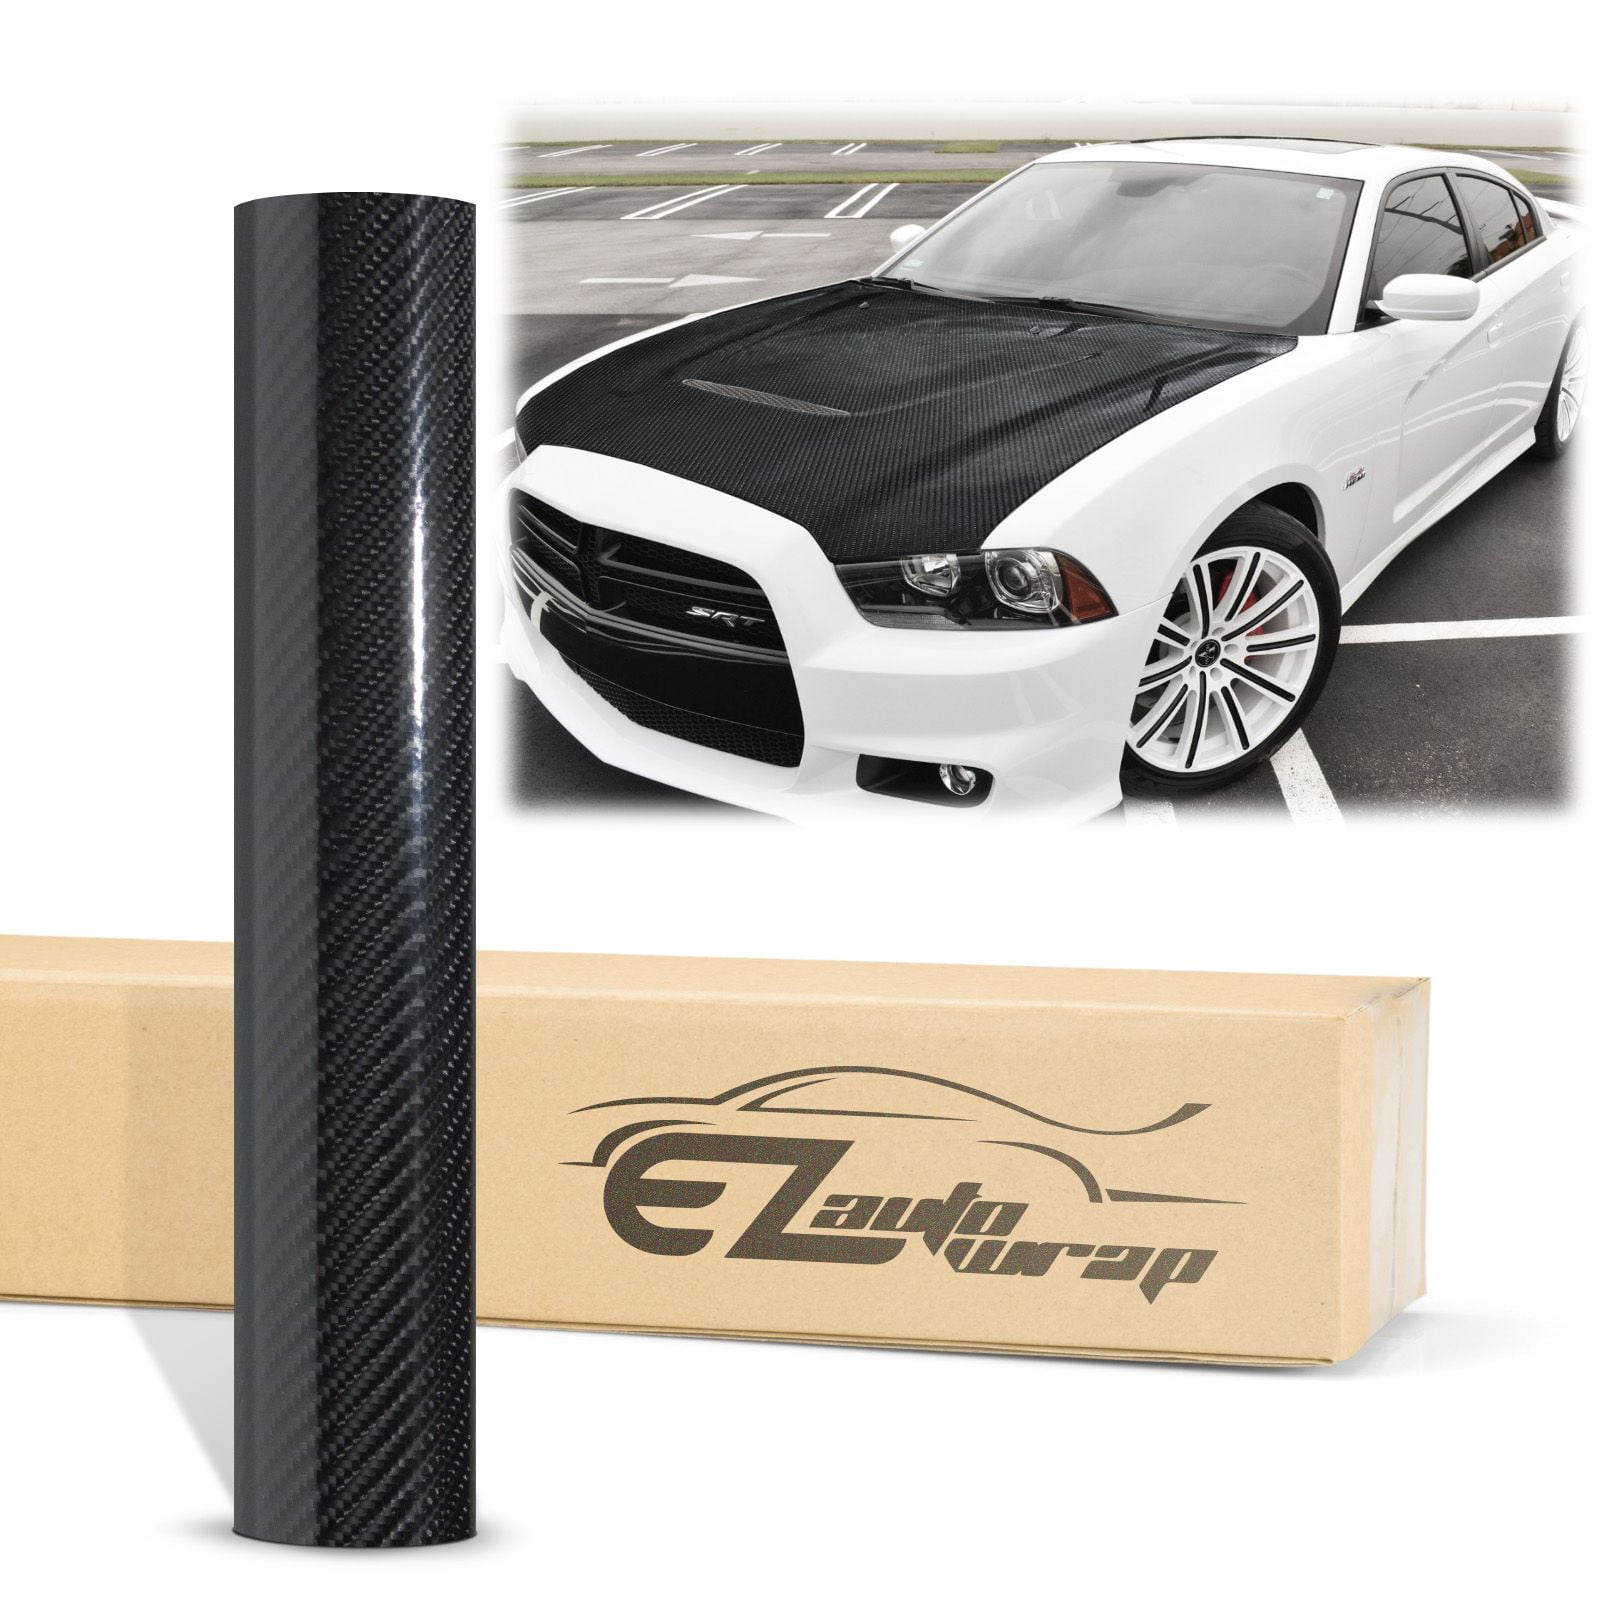 1Pc 40*100cm 3D Car Black Interior Accessories Panel Carbon Fiber Wrap Sticker 